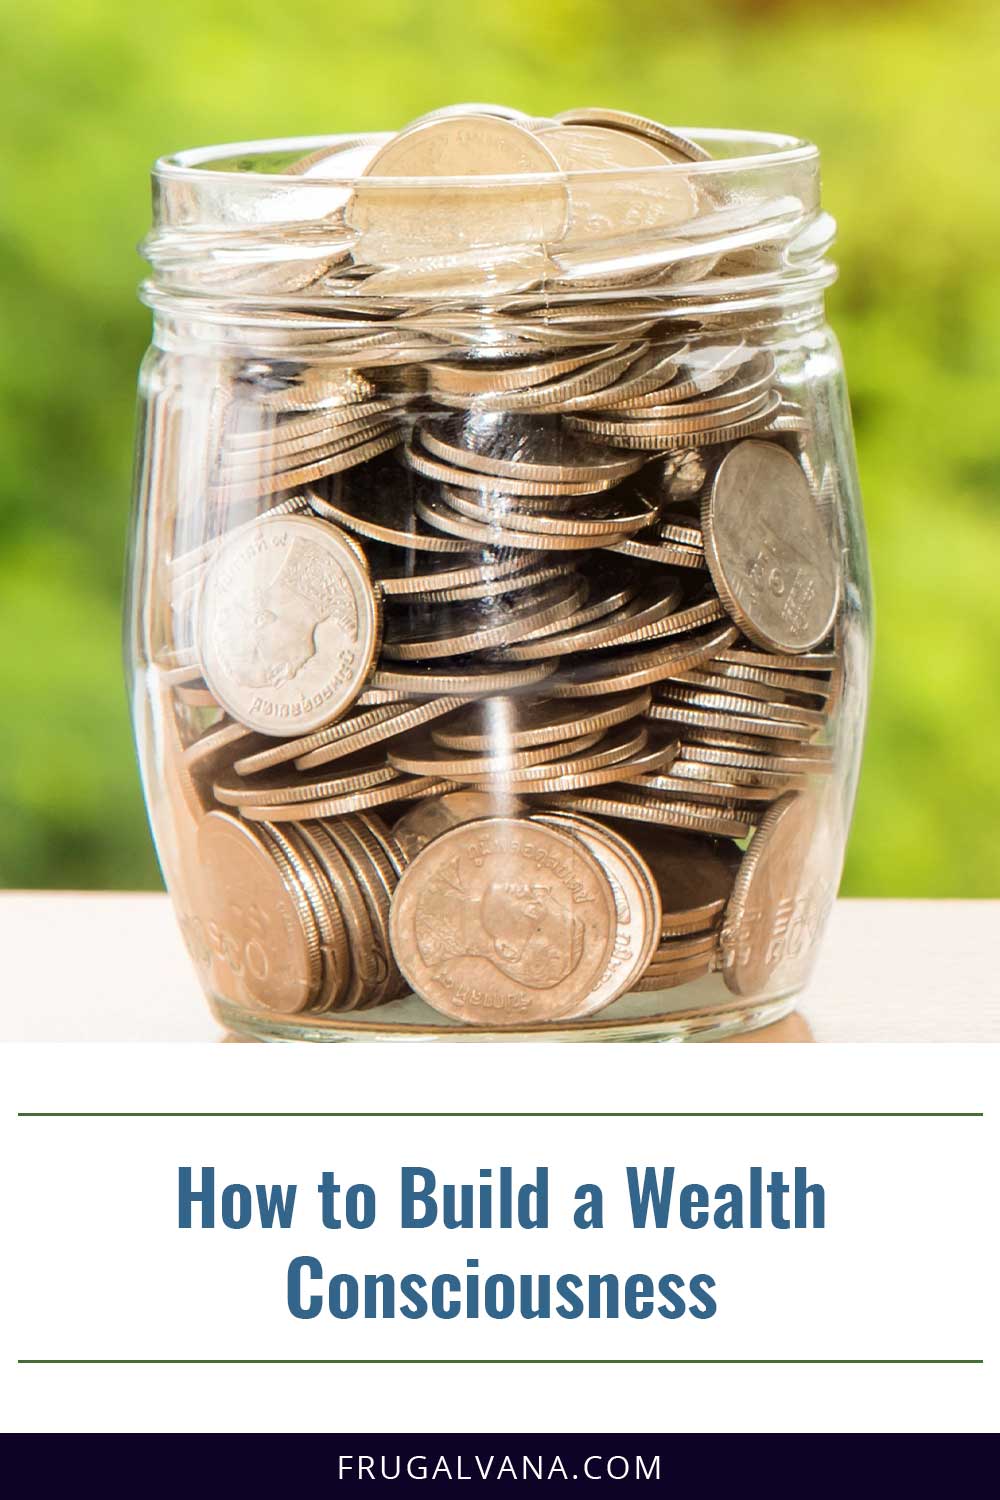 How to Build a Wealth Consciousness